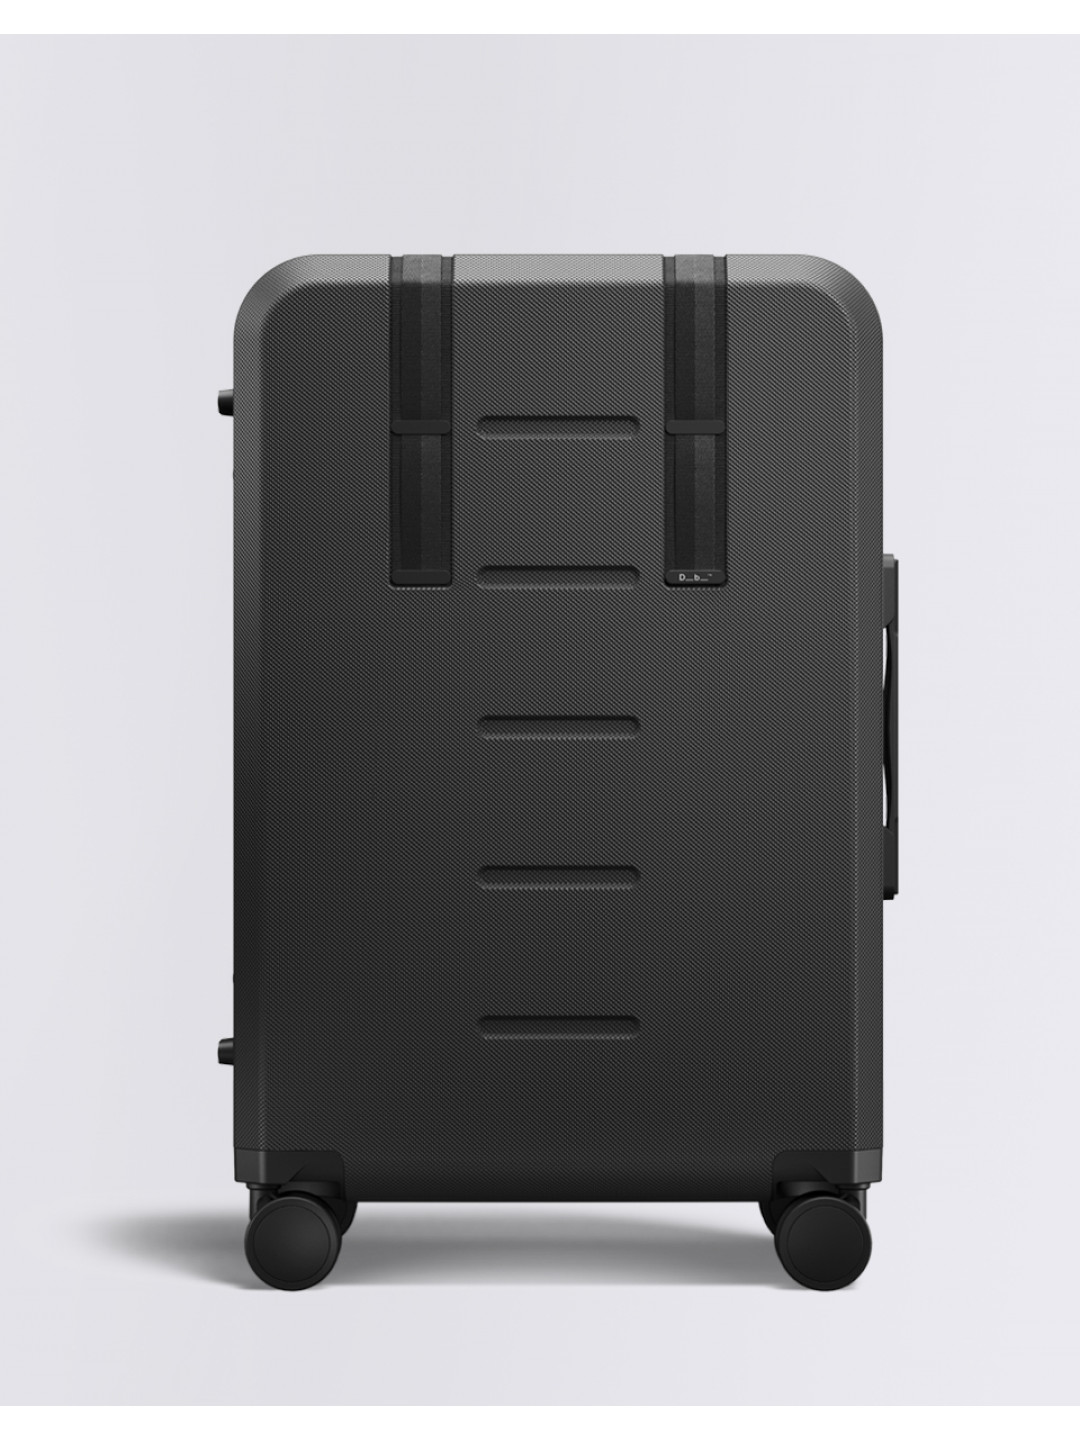 Db Ramverk Check-in Luggage Medium Black Out